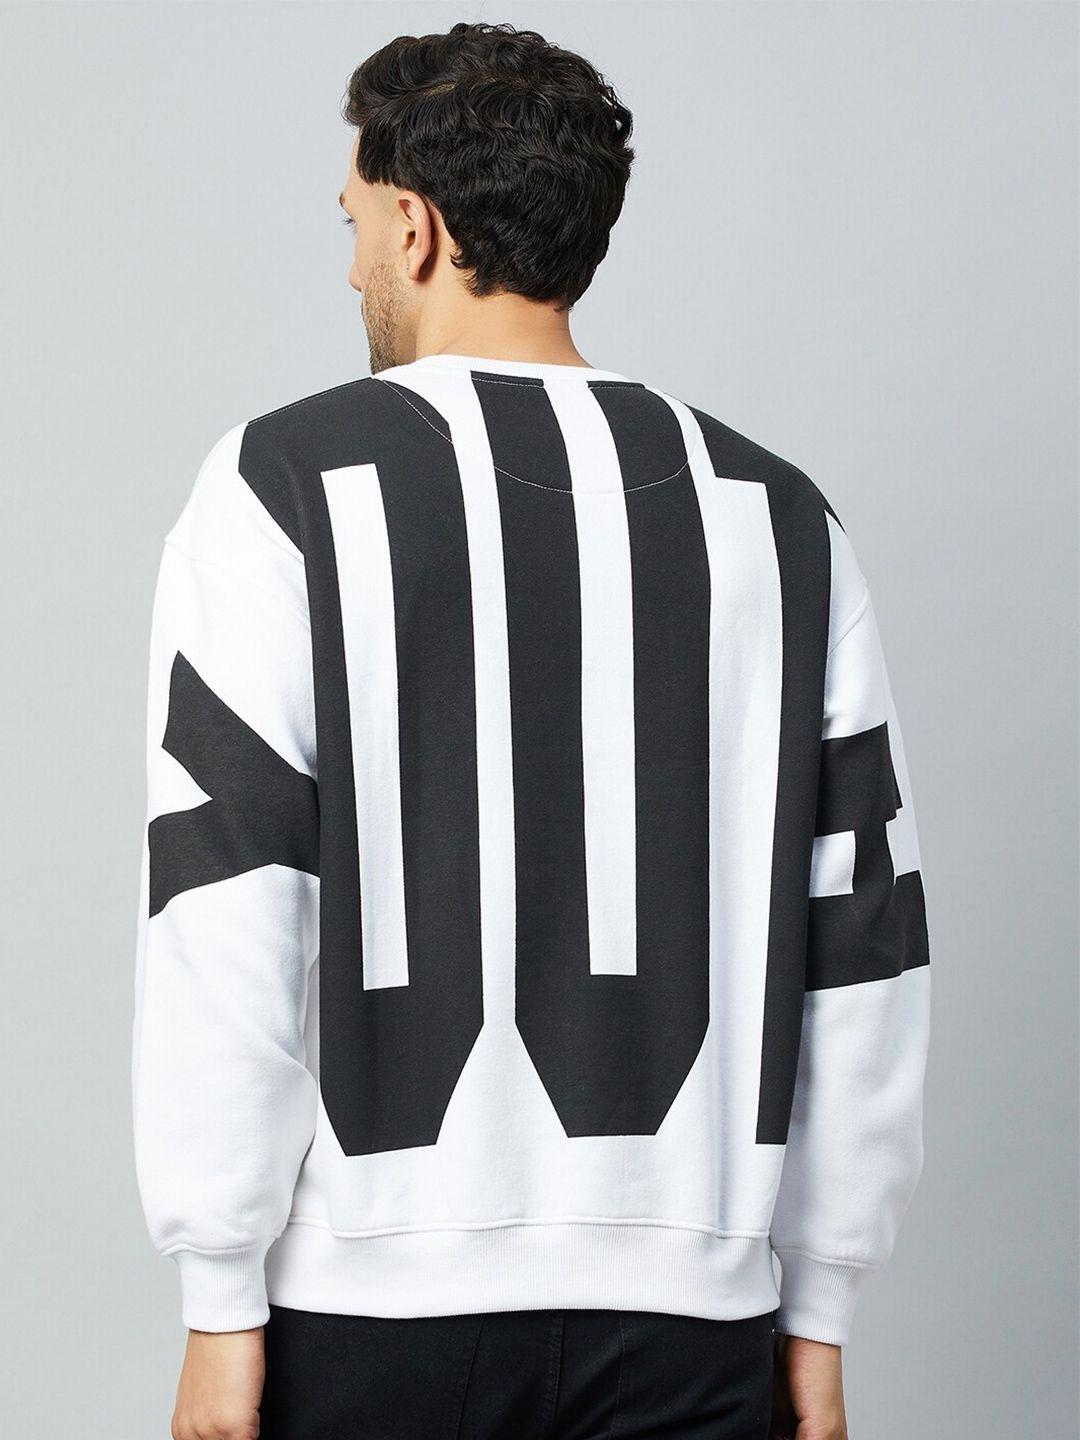 Club York Typography Printed Fleece Pullover Sweatshirt